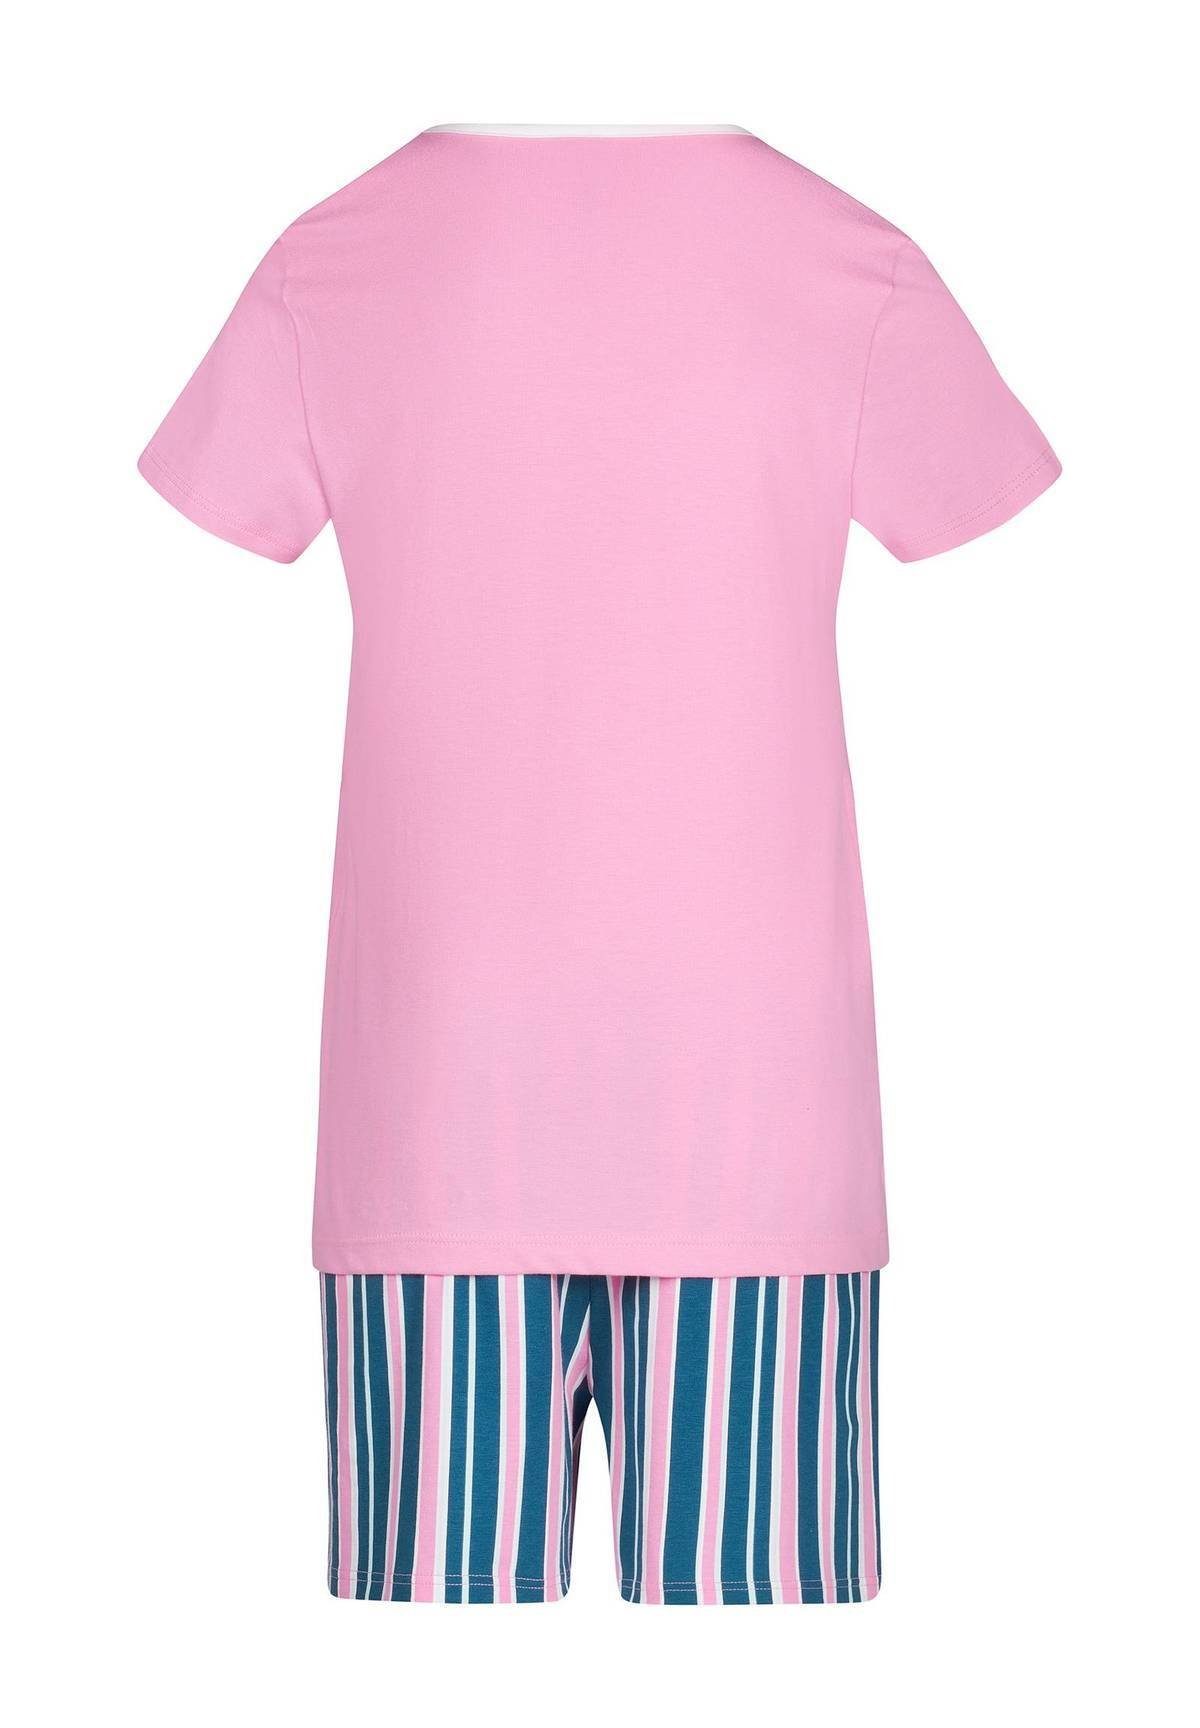 2-tlg. Pyjama kurz, Skiny Set Pink/Blau - Kinder, Schlafanzug Mädchen